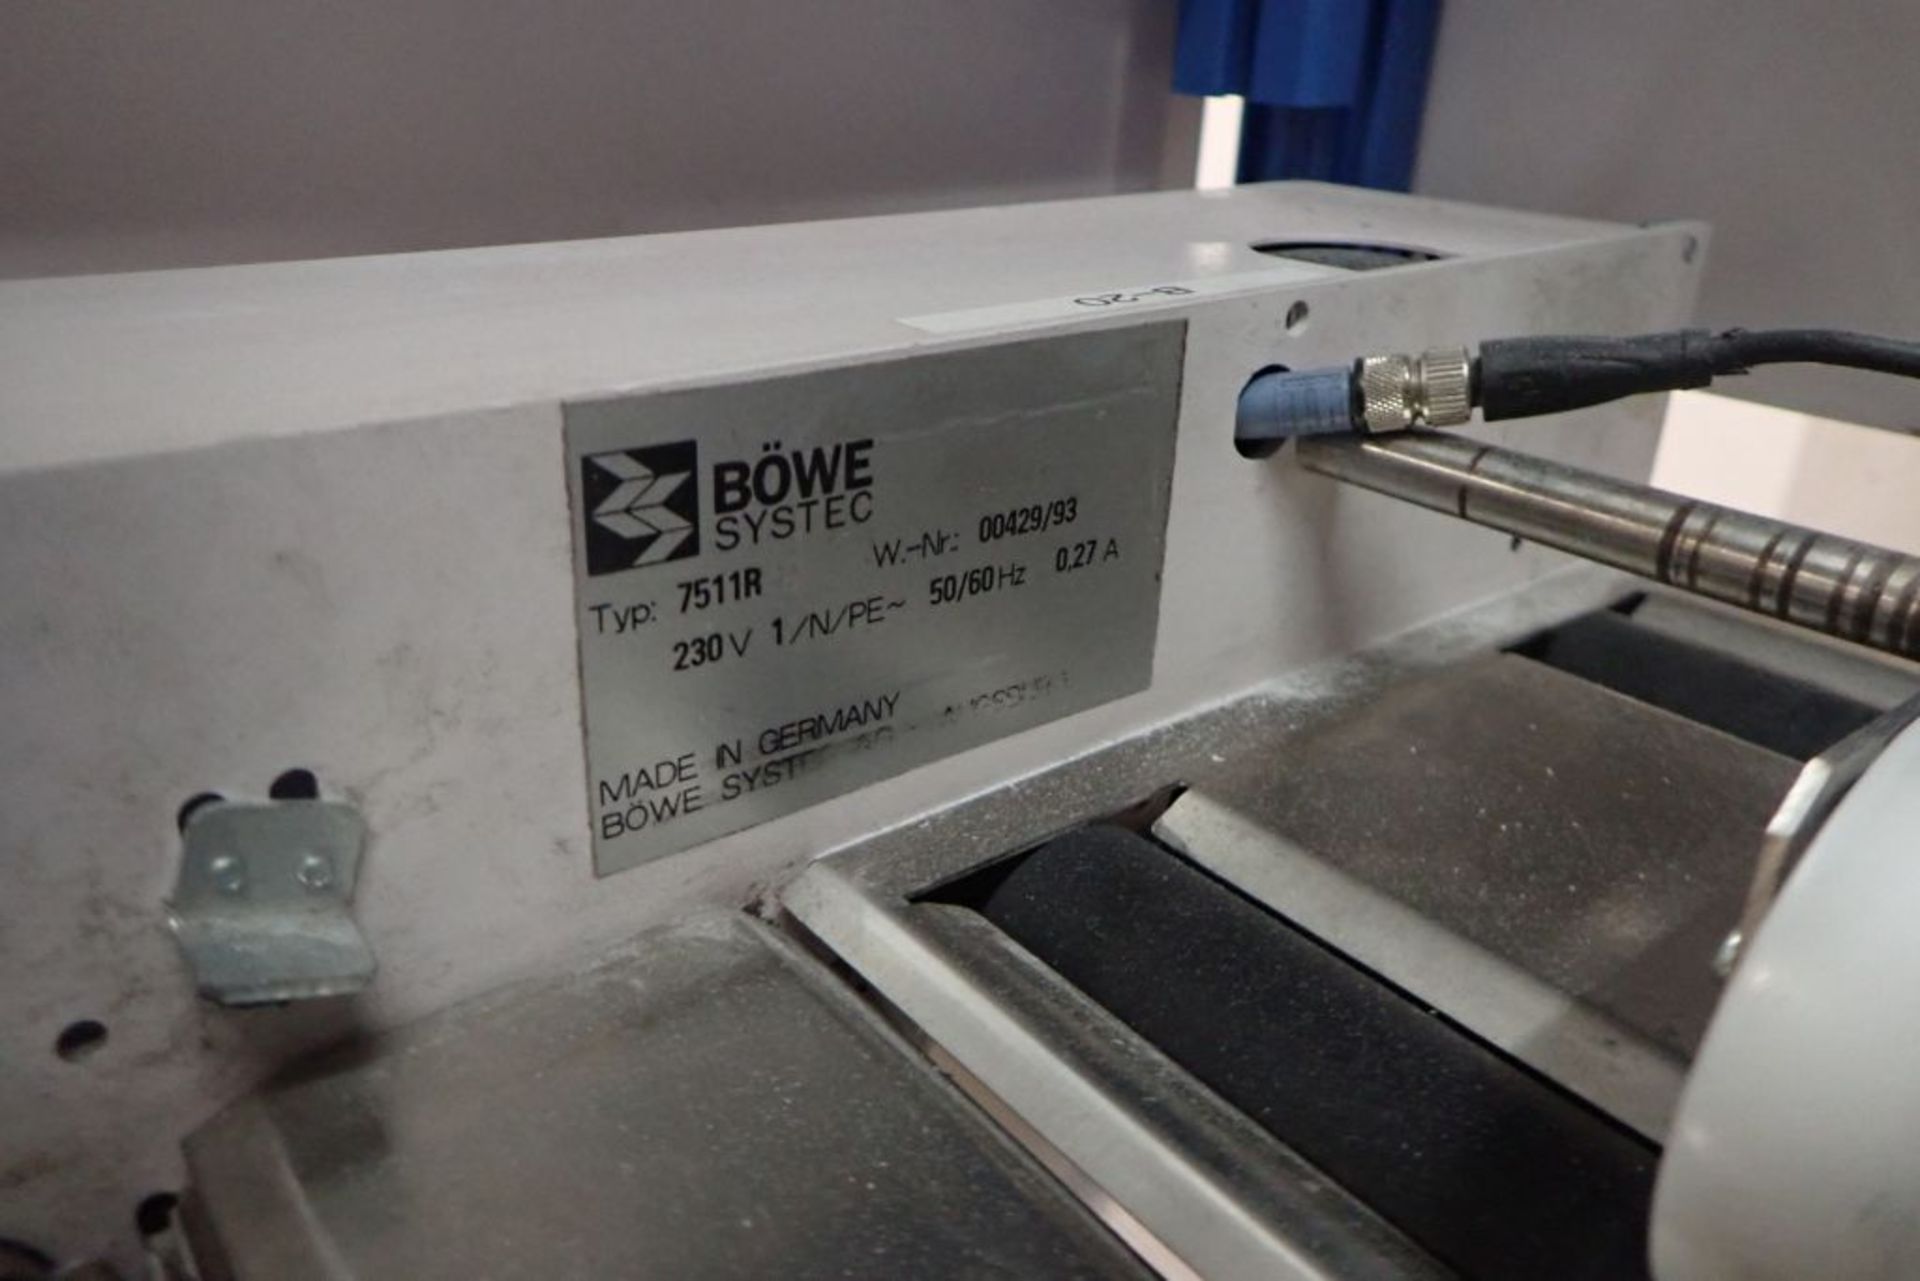 Bowe Systec Turbo Premium Automatic Mailing System - Bild 267 aus 297